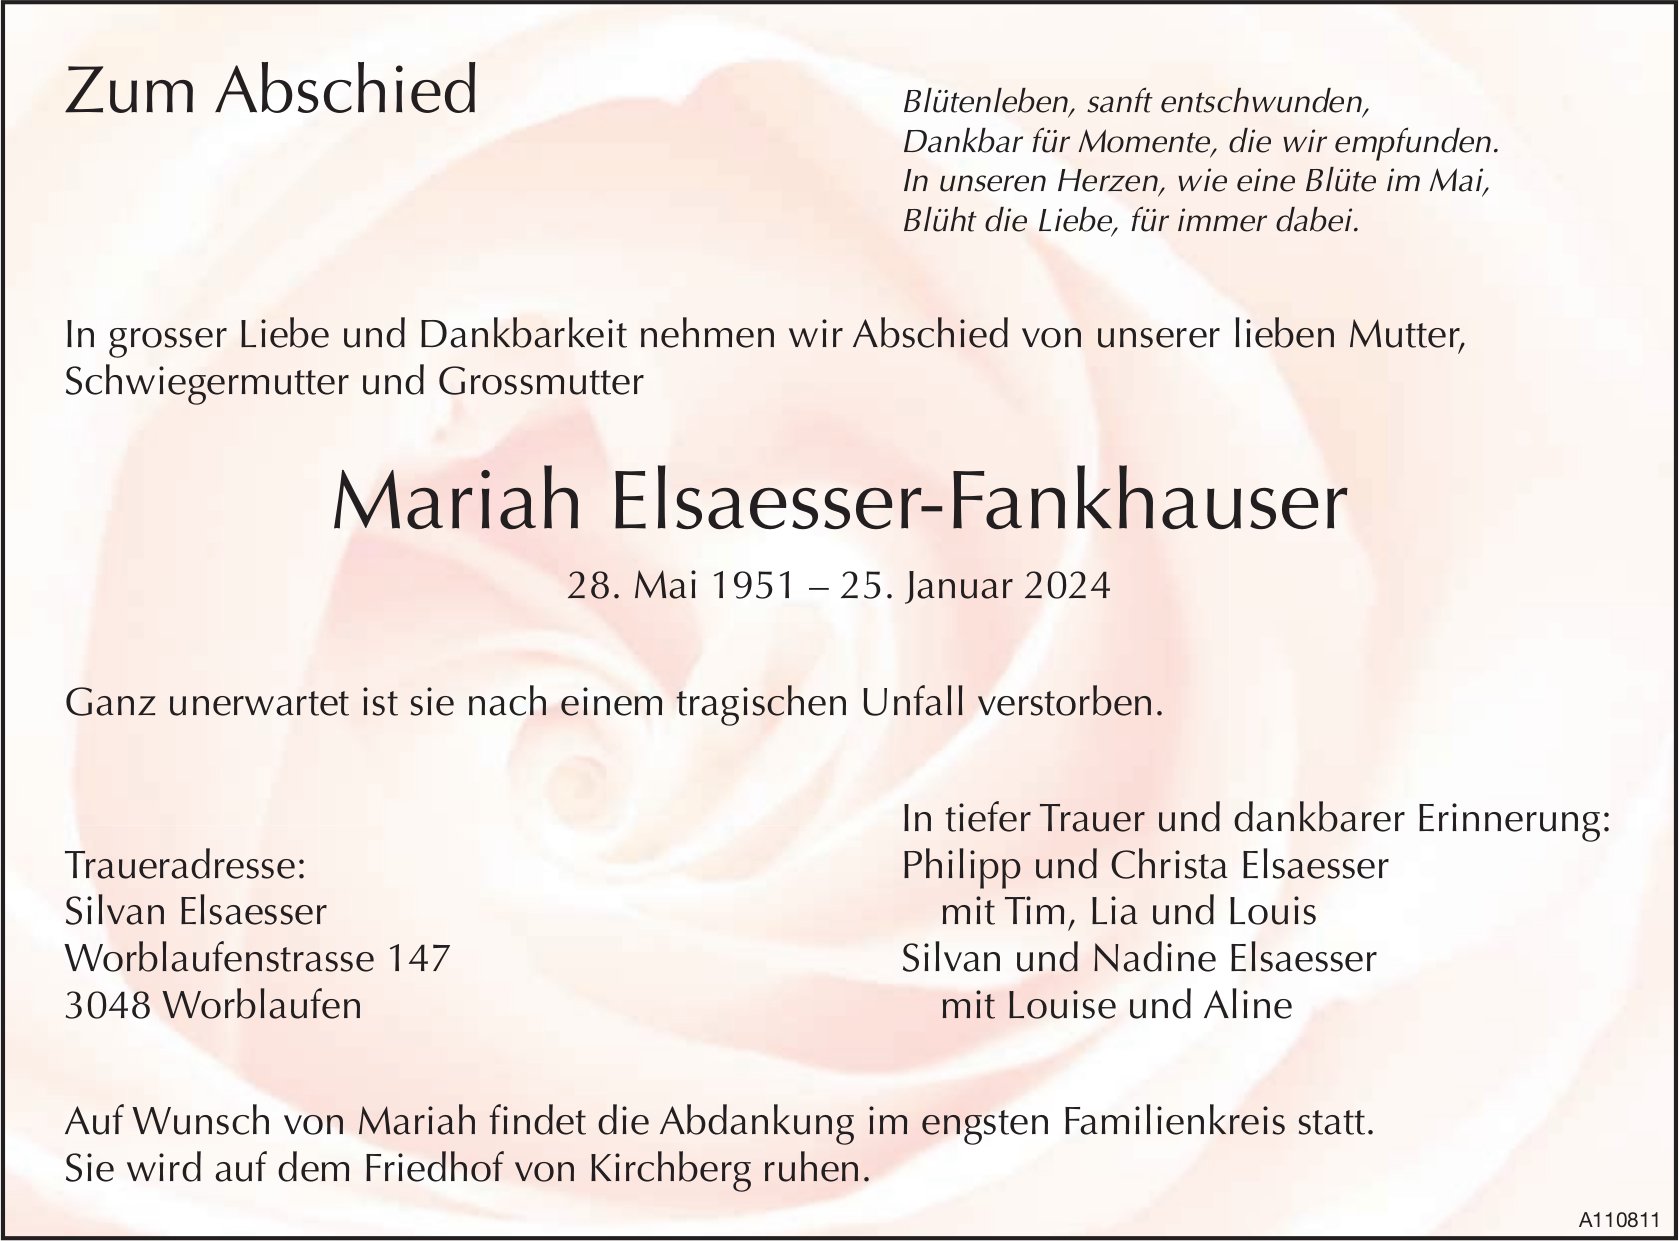 Mariah Elsaesser-Fankhauser, Januar 2024 / TA